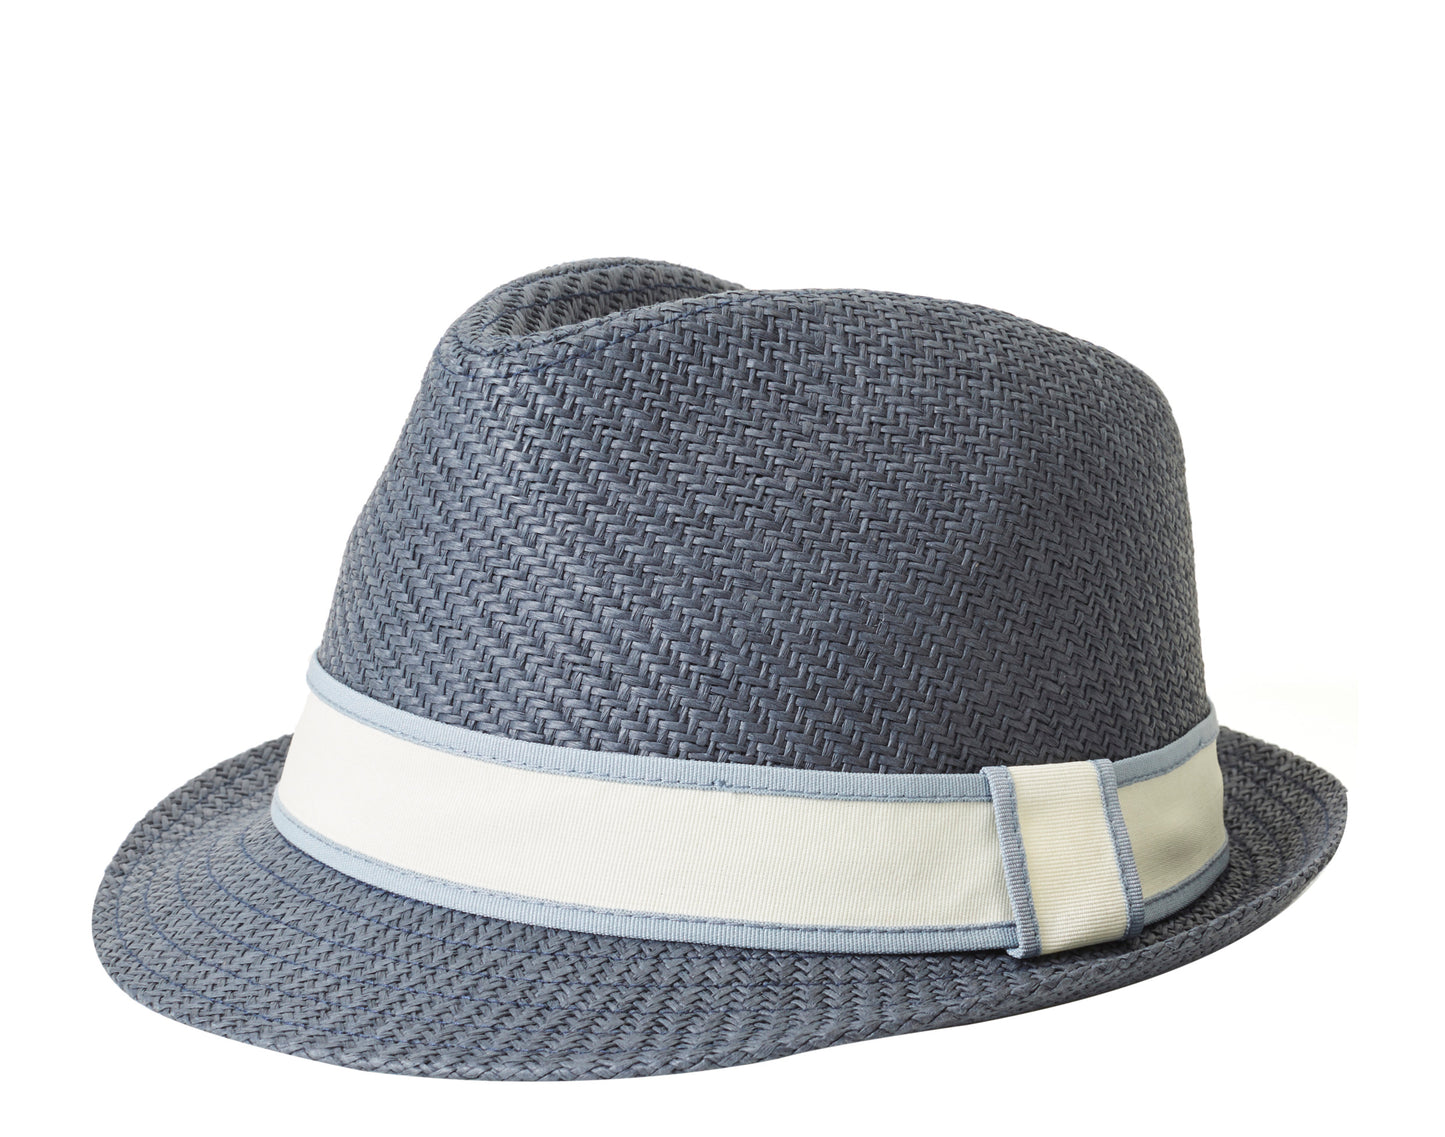 Goorin Bros Killian Fedora Navy/White Men's Hat 600-0003-NVY